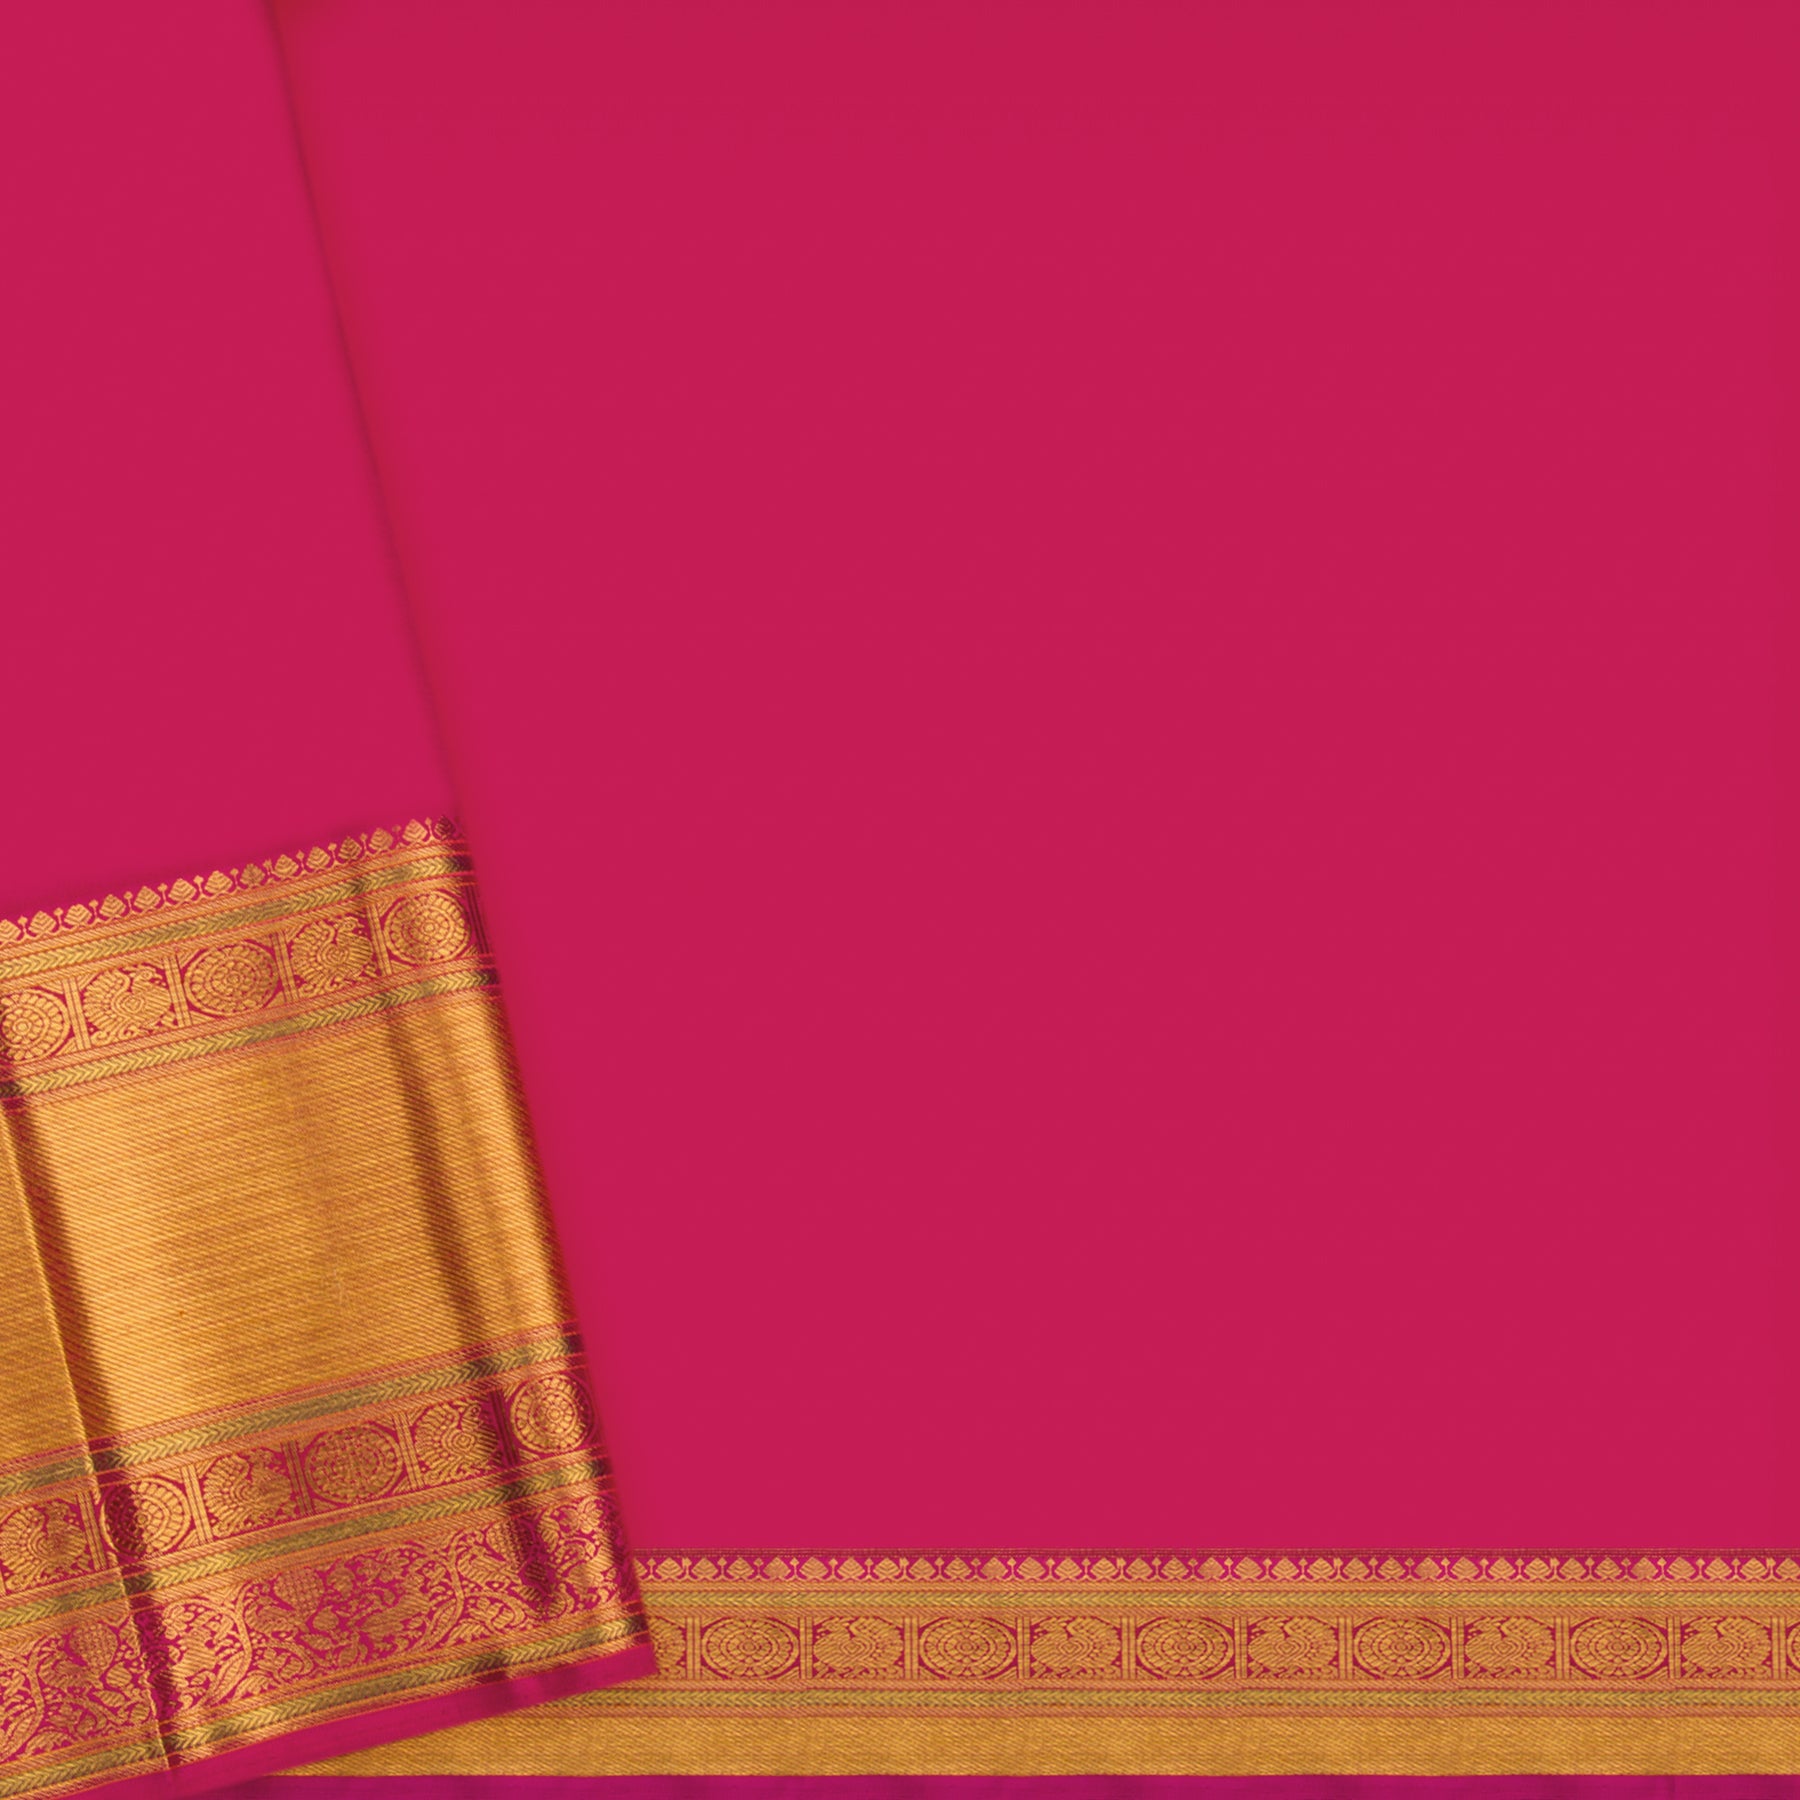 Kanakavalli Kanjivaram Silk Sari 23-110-HS001-12254 - Blouse View